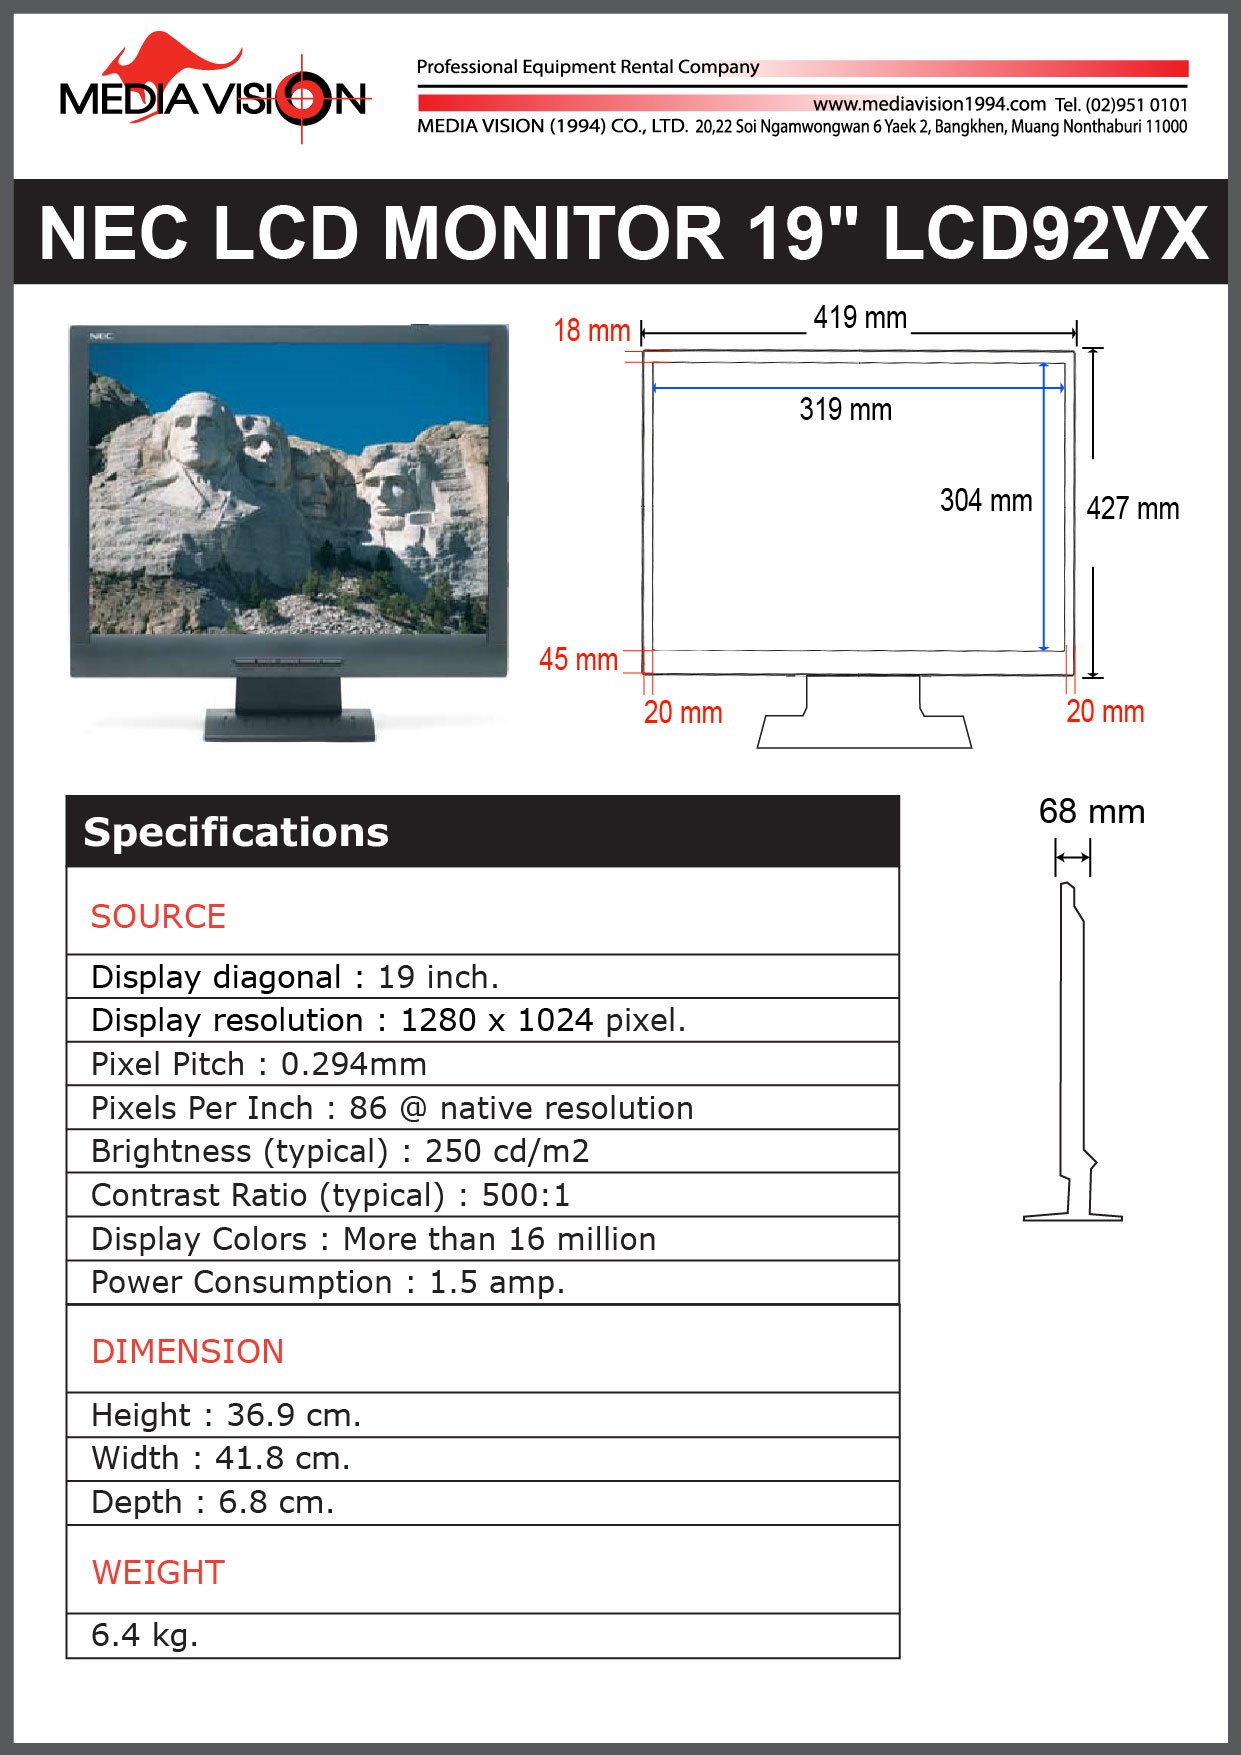 NEC LCD MONITOR 19" LCD92VX